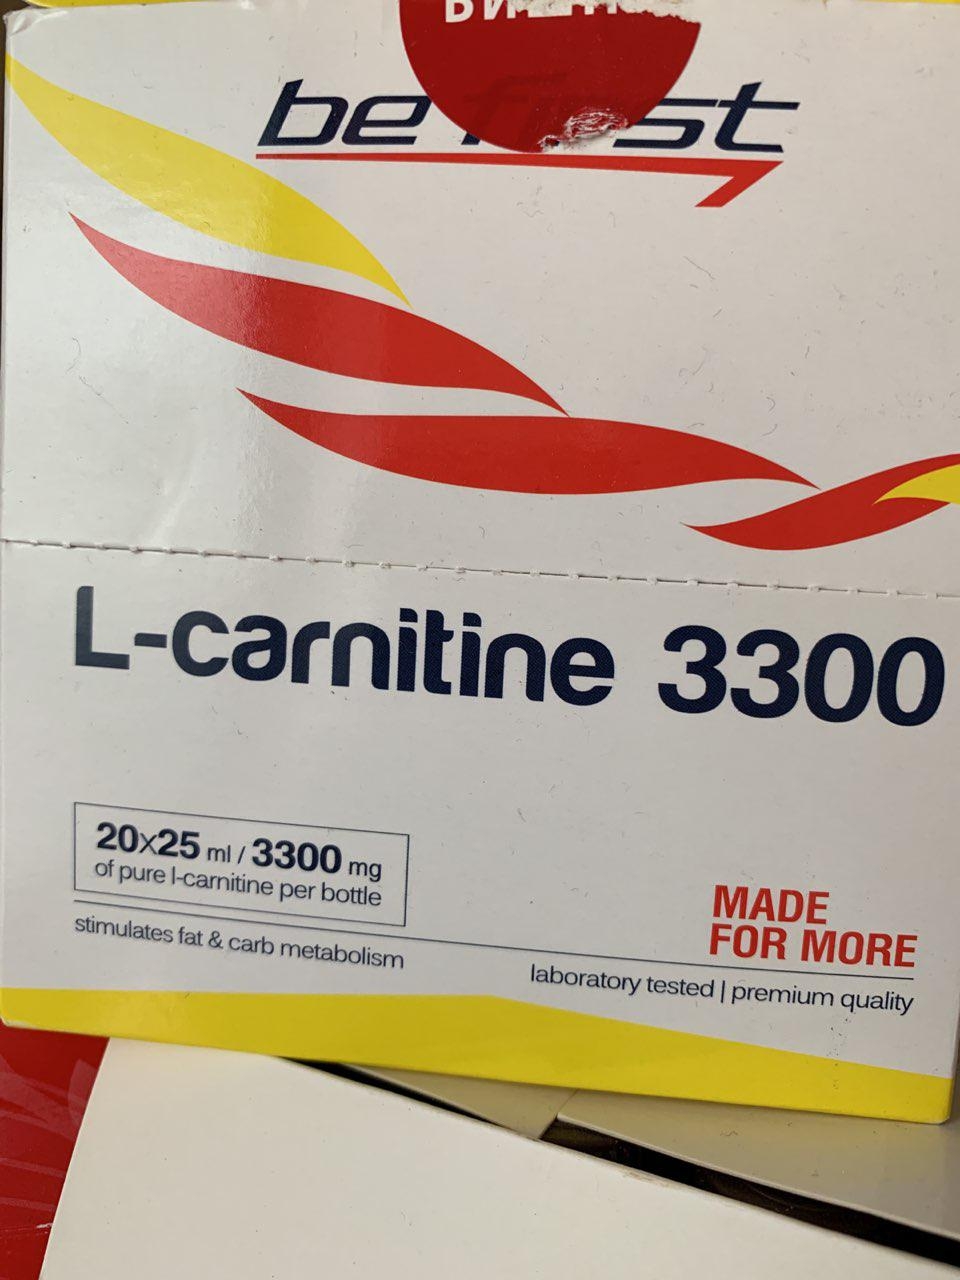 Be first L-carnitine 3300 - Мне очень понравилось